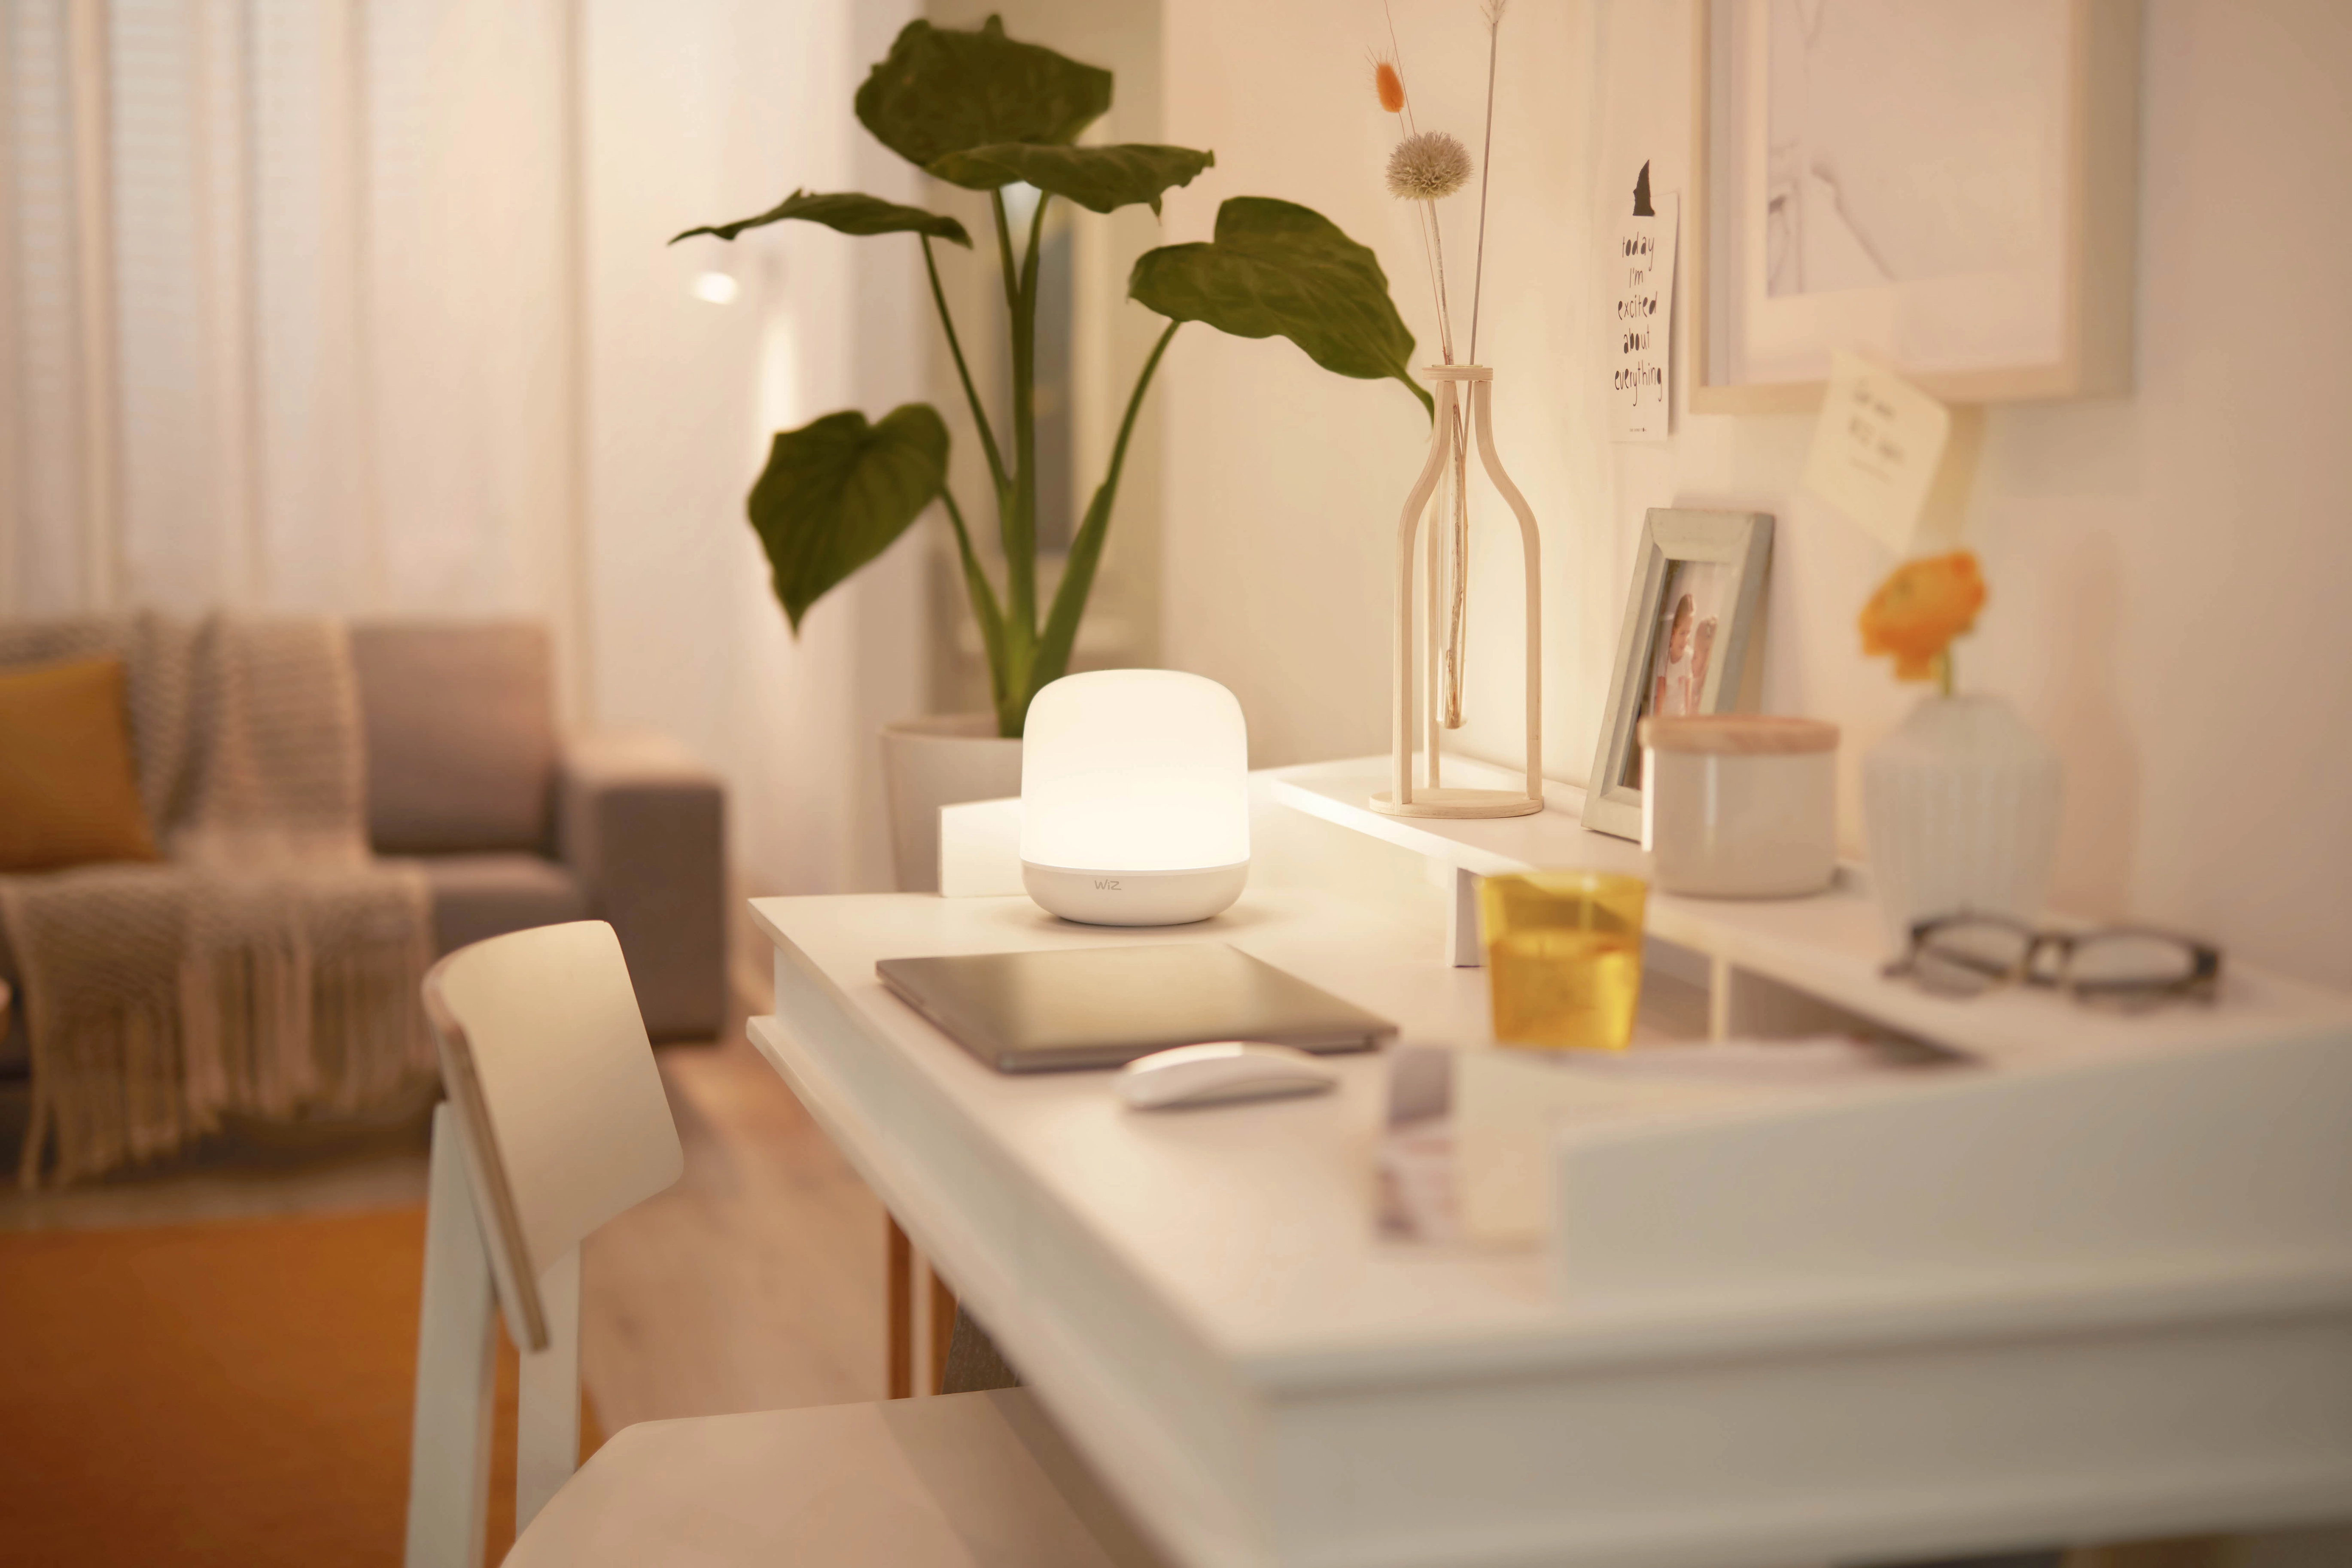 WiZ Tischleuchte Hero inkl. Philips E27 LED-Lampe kaufen bei OBI